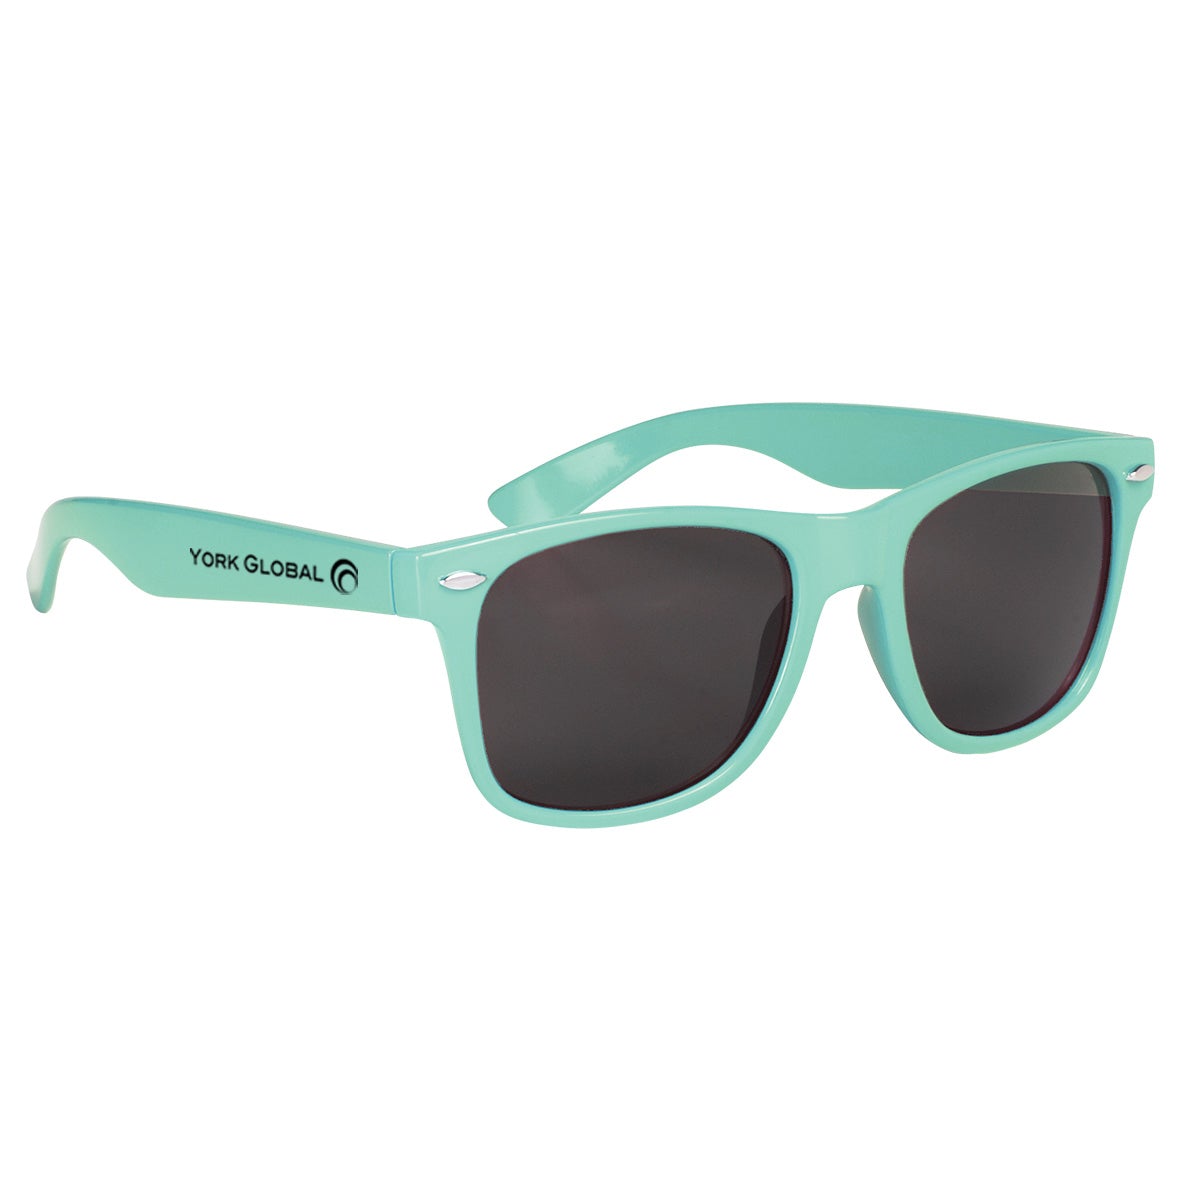 Malibu Sunglasses Sunglasses Hit Promo Seafoam Single Color 